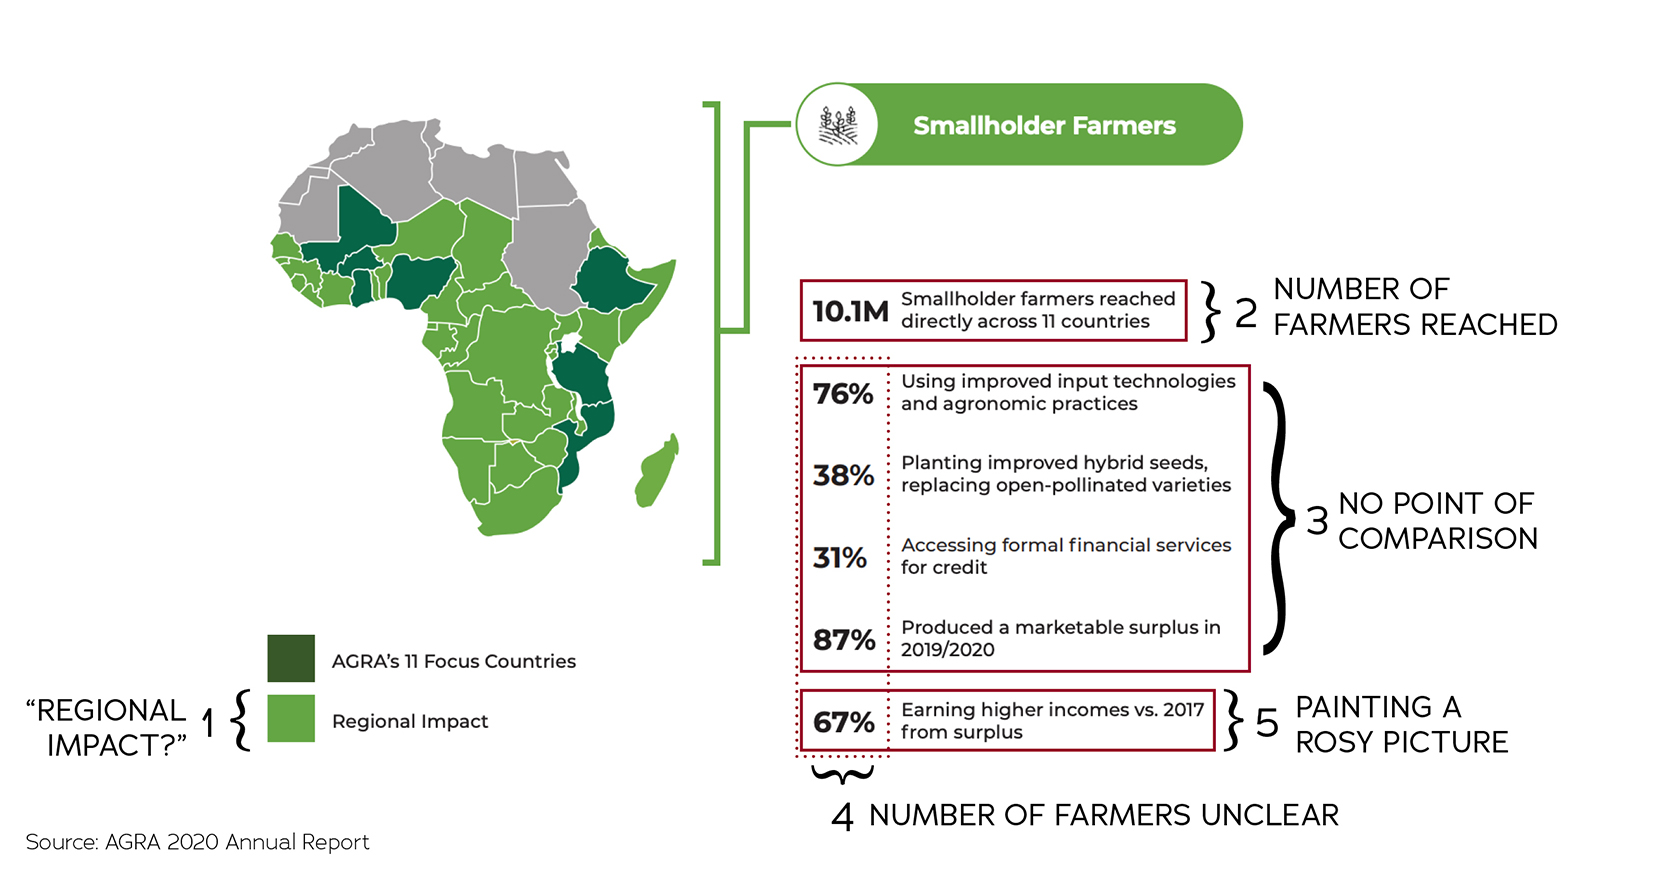 summary of the 2017-21 impact on smallholder farmers